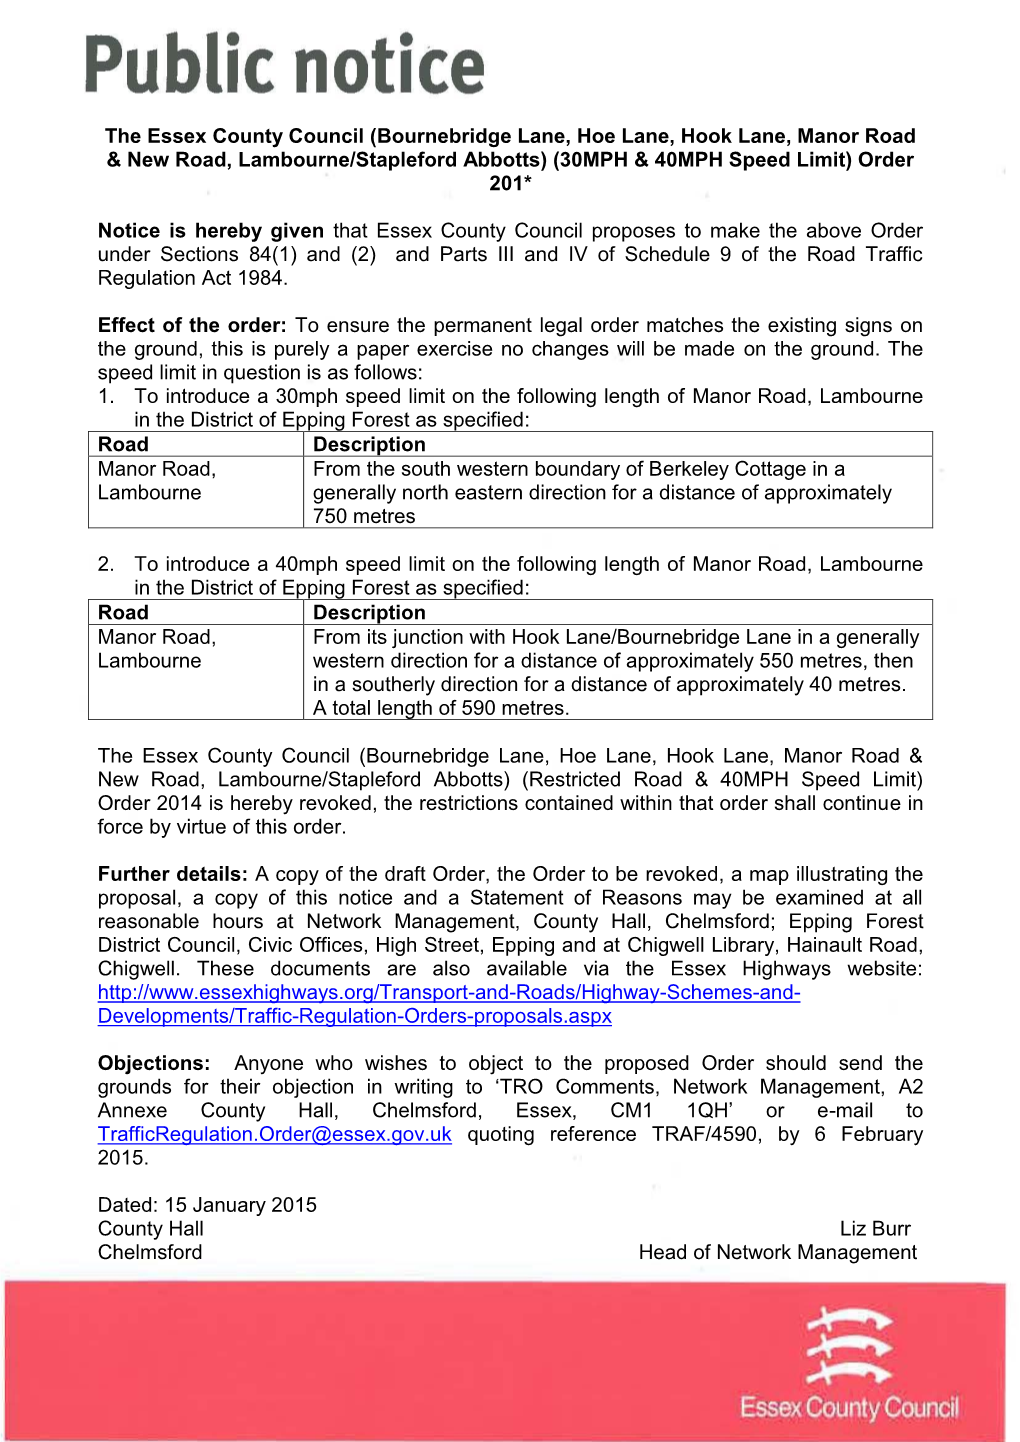 The Essex County Council (Bournebridge Lane, Hoe Lane, Hook Lane, Manor Road & New Road, Lambourne/Stapleford Abbotts) (30MPH & 40MPH Speed Limit) Order 201*